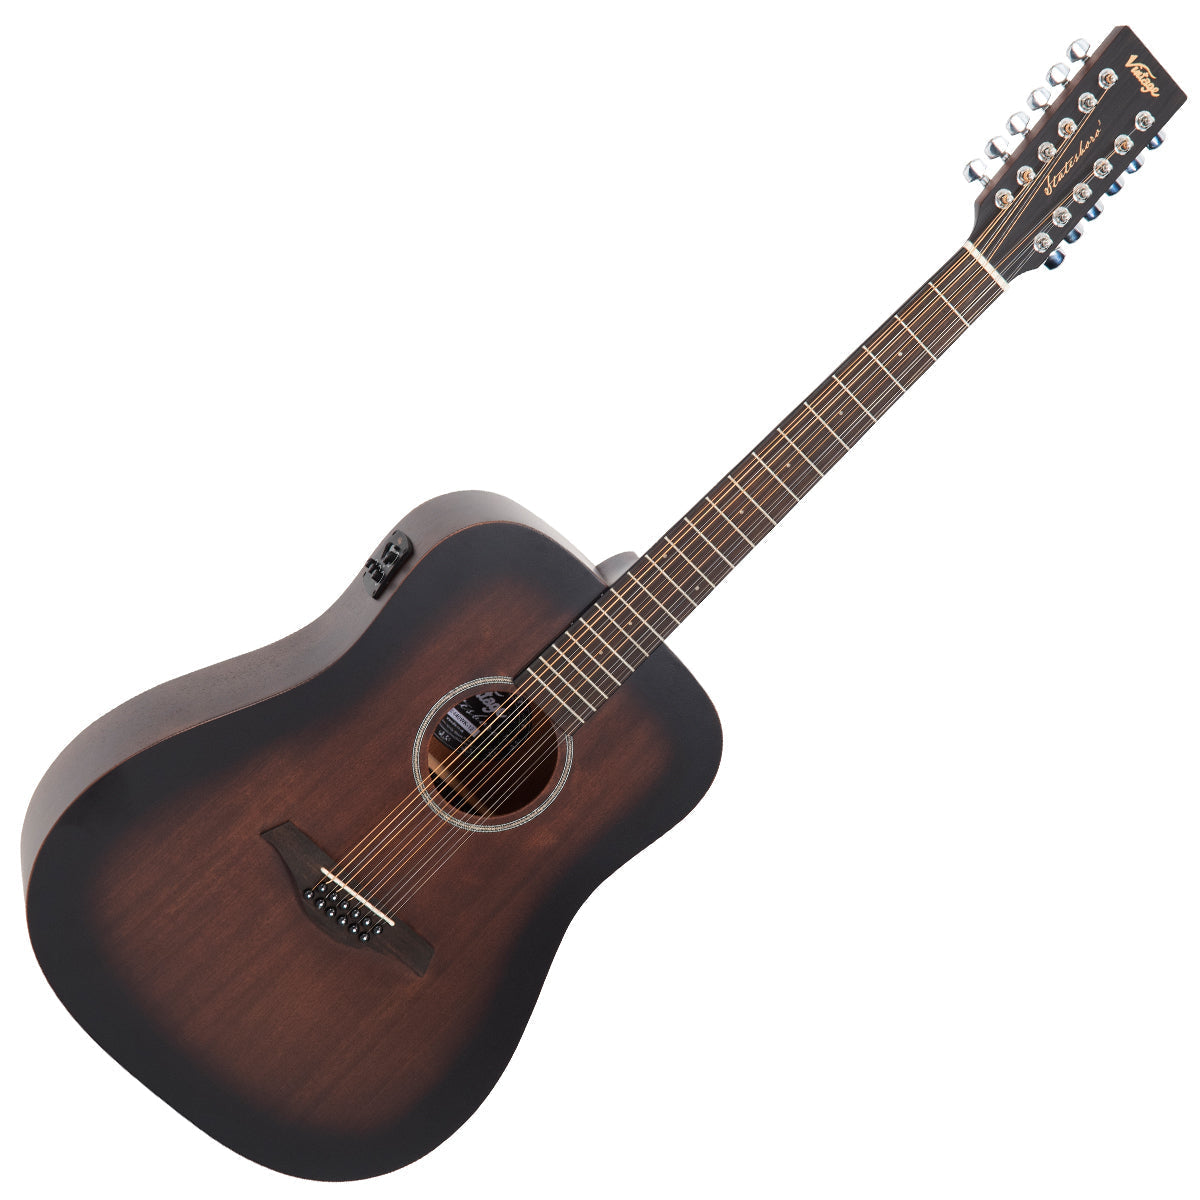 Vintage Statesboro' 'Dreadnought' Electro-Acoustic 12-String Guitar ~ Whisky Sour, 12 String Acoustics/Electro-Acoustics for sale at Richards Guitars.